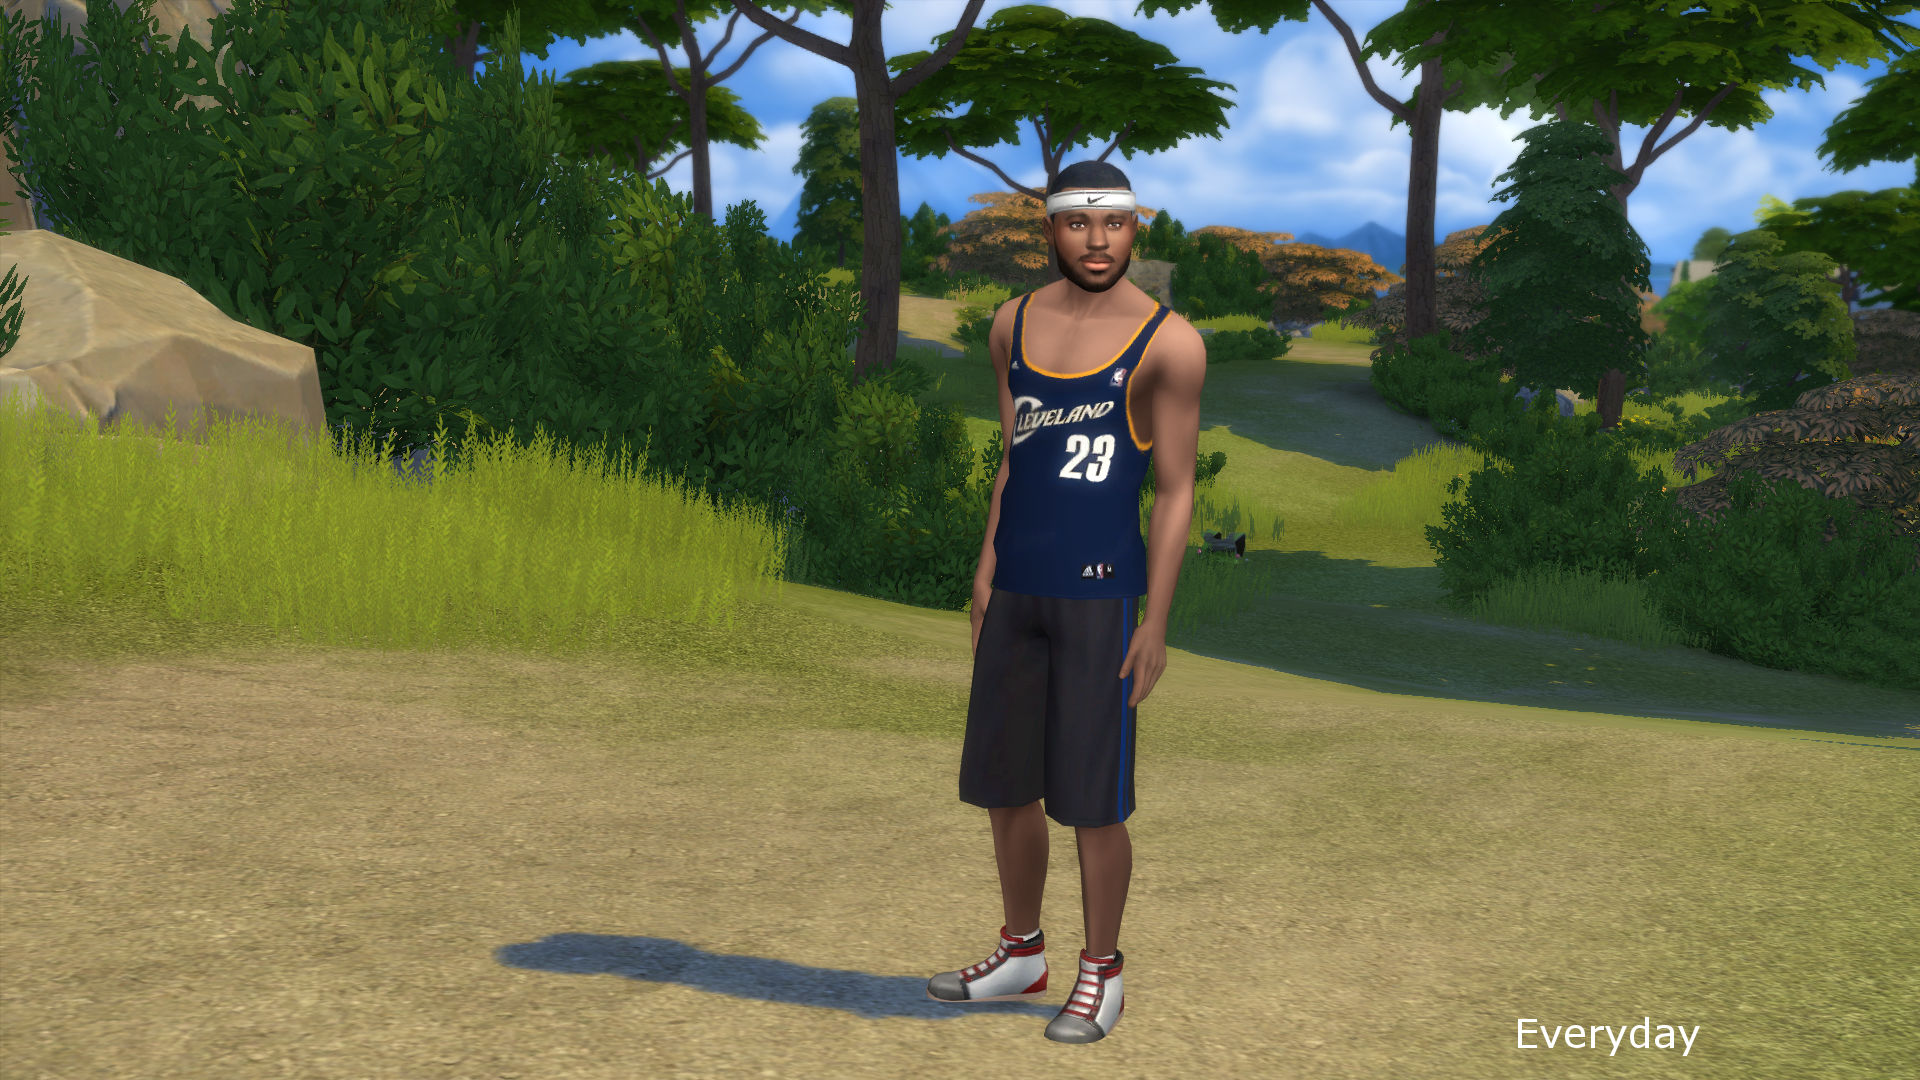 Mod The Sims Lebron James